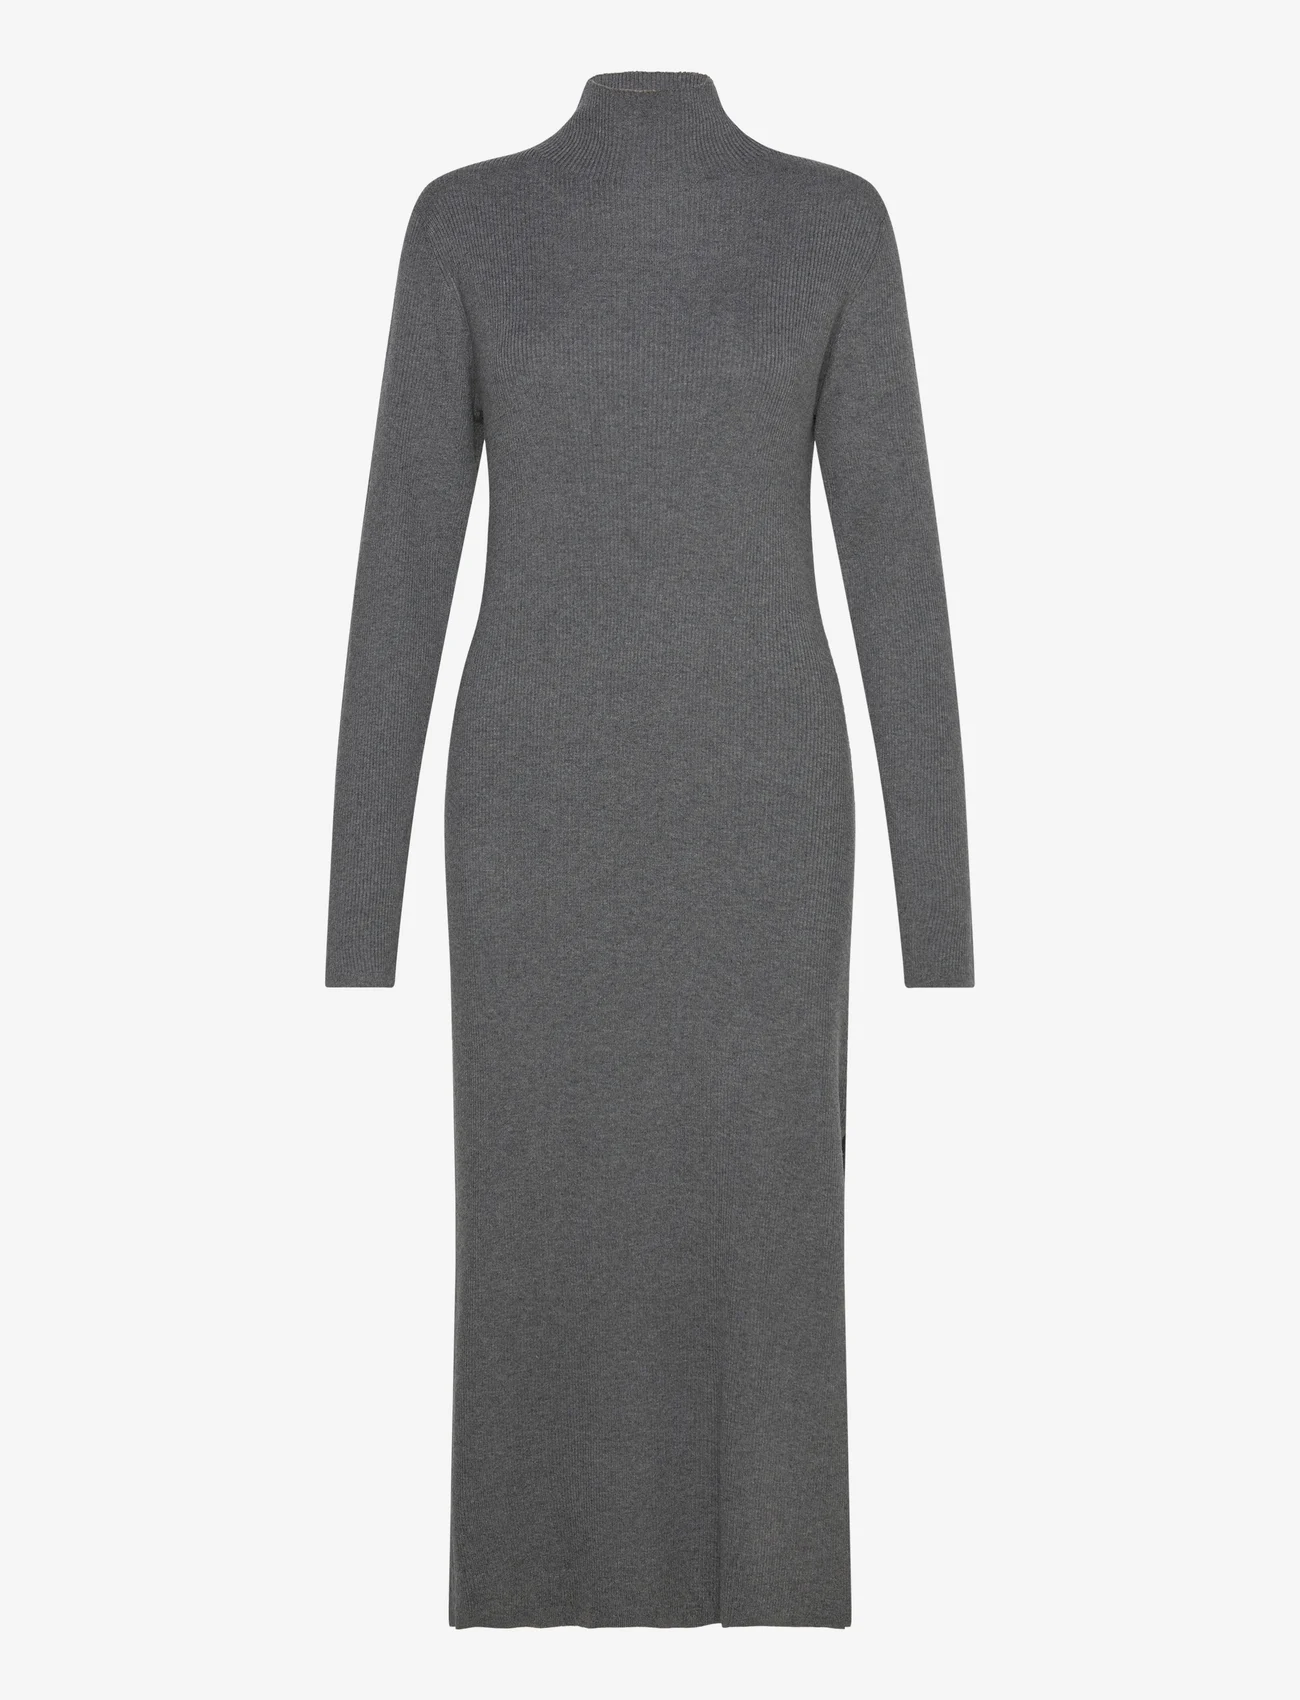 Coster Copenhagen - CC Heart GLORIA knit dress - stramme kjoler - dark grey melange - 0